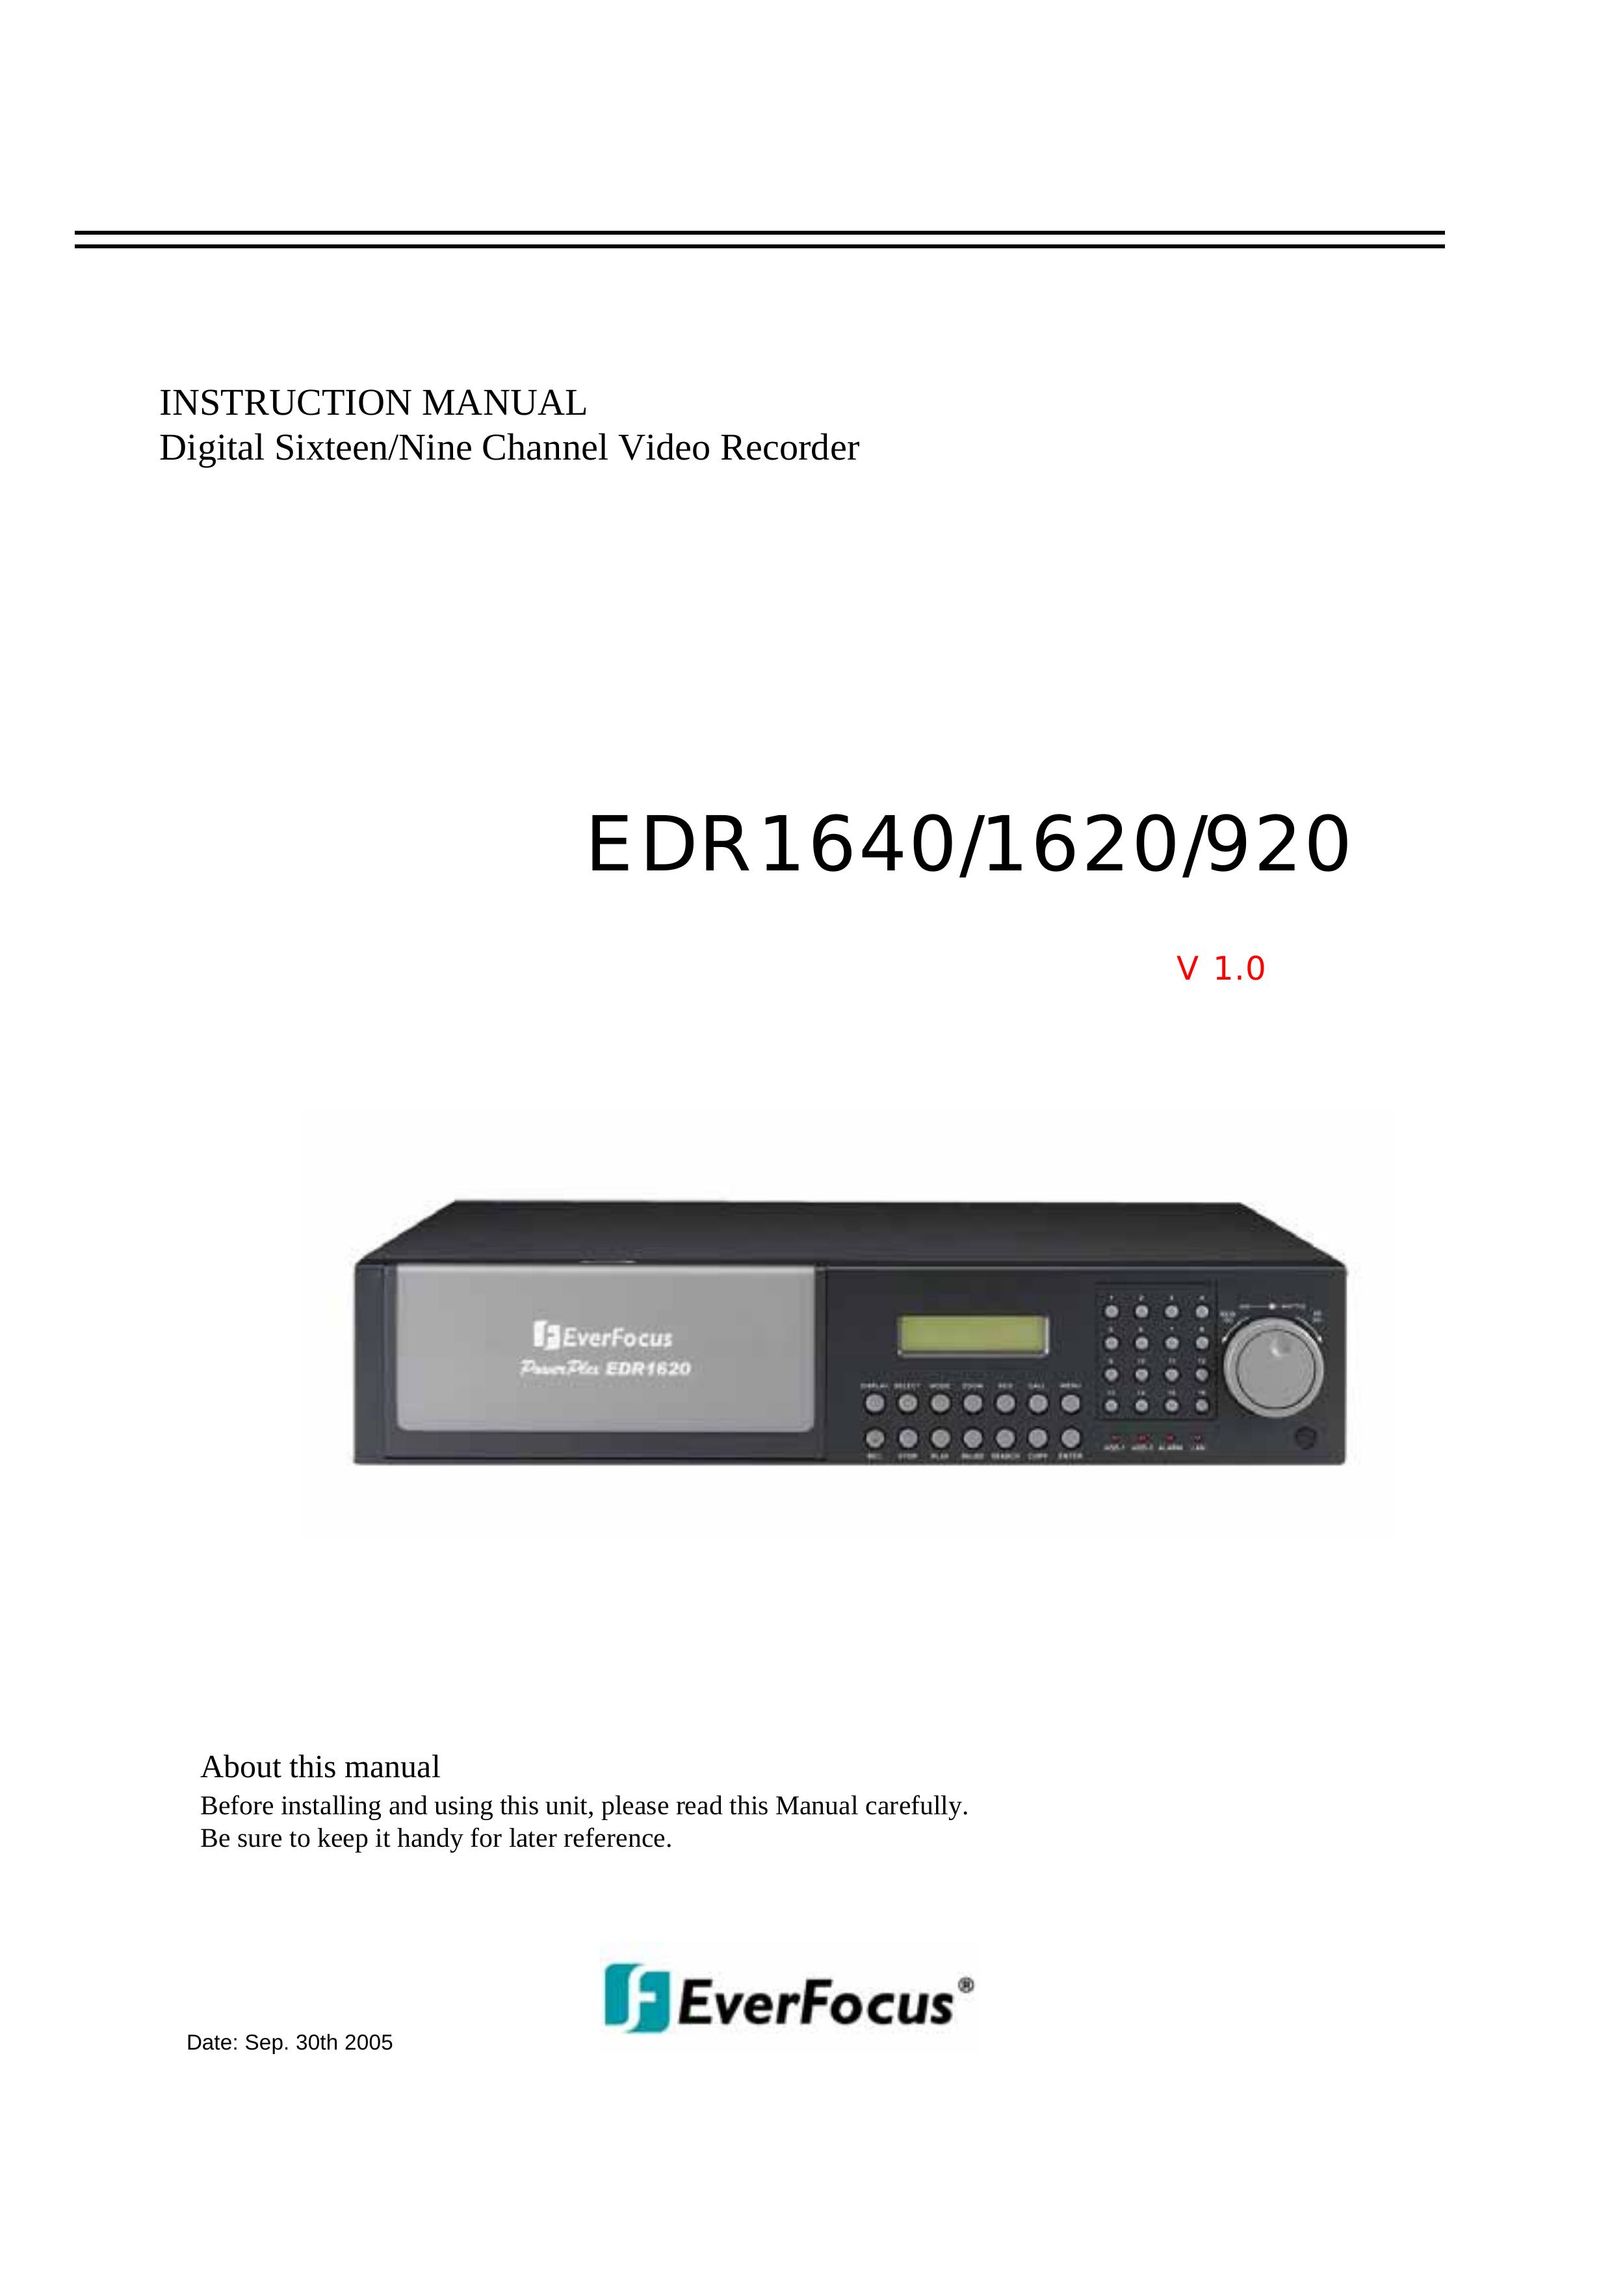 EverFocus EDR1620 DVR User Manual